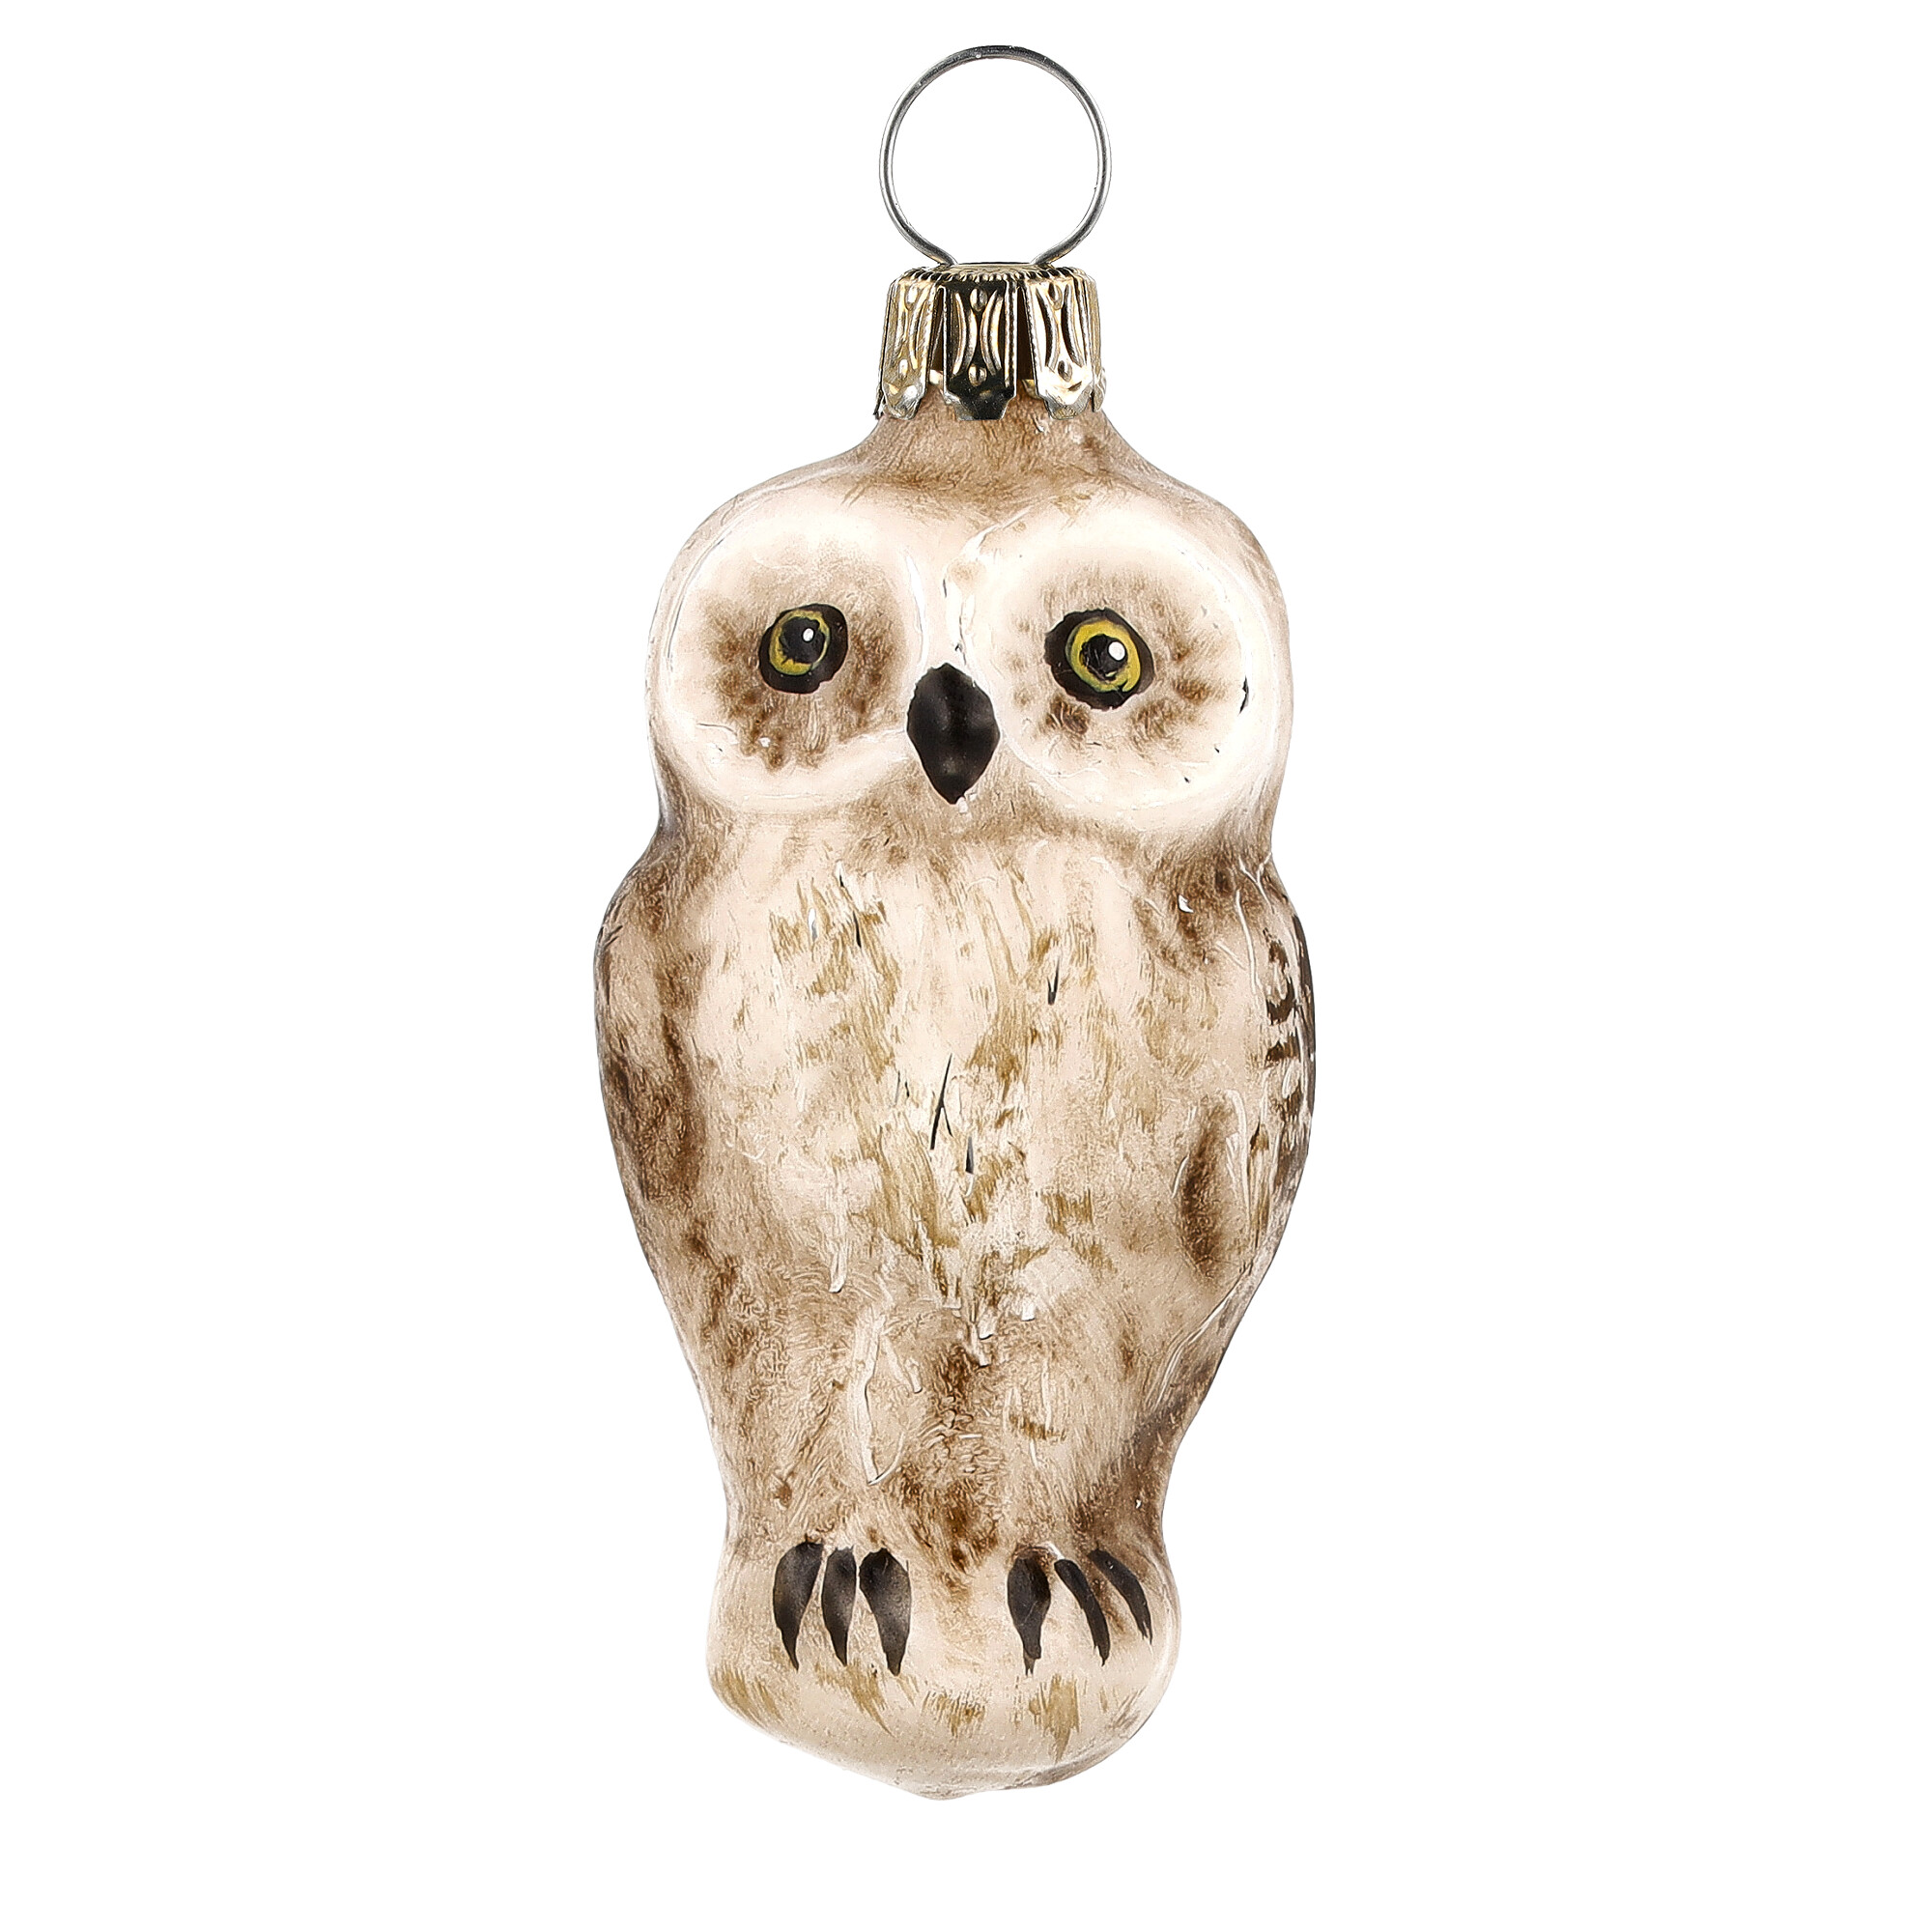 Retro Vintage style Christmas Glass Ornament - Little owl